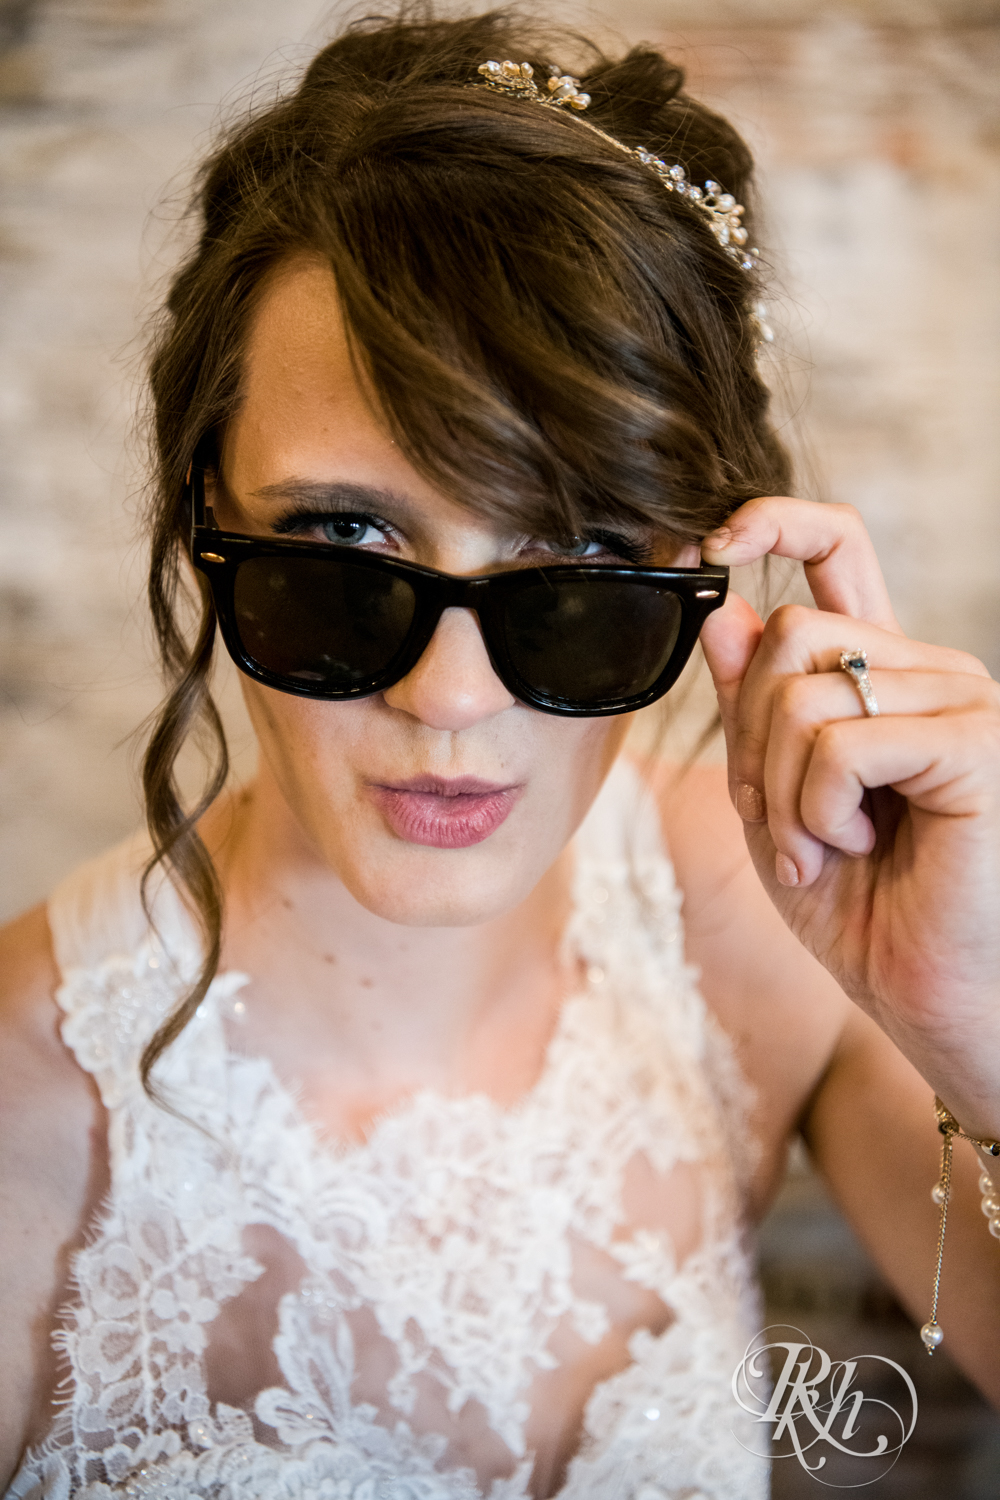 Bride wears sunglasses at Kellerman's Event Center in White Bear Lake, Minnesota.